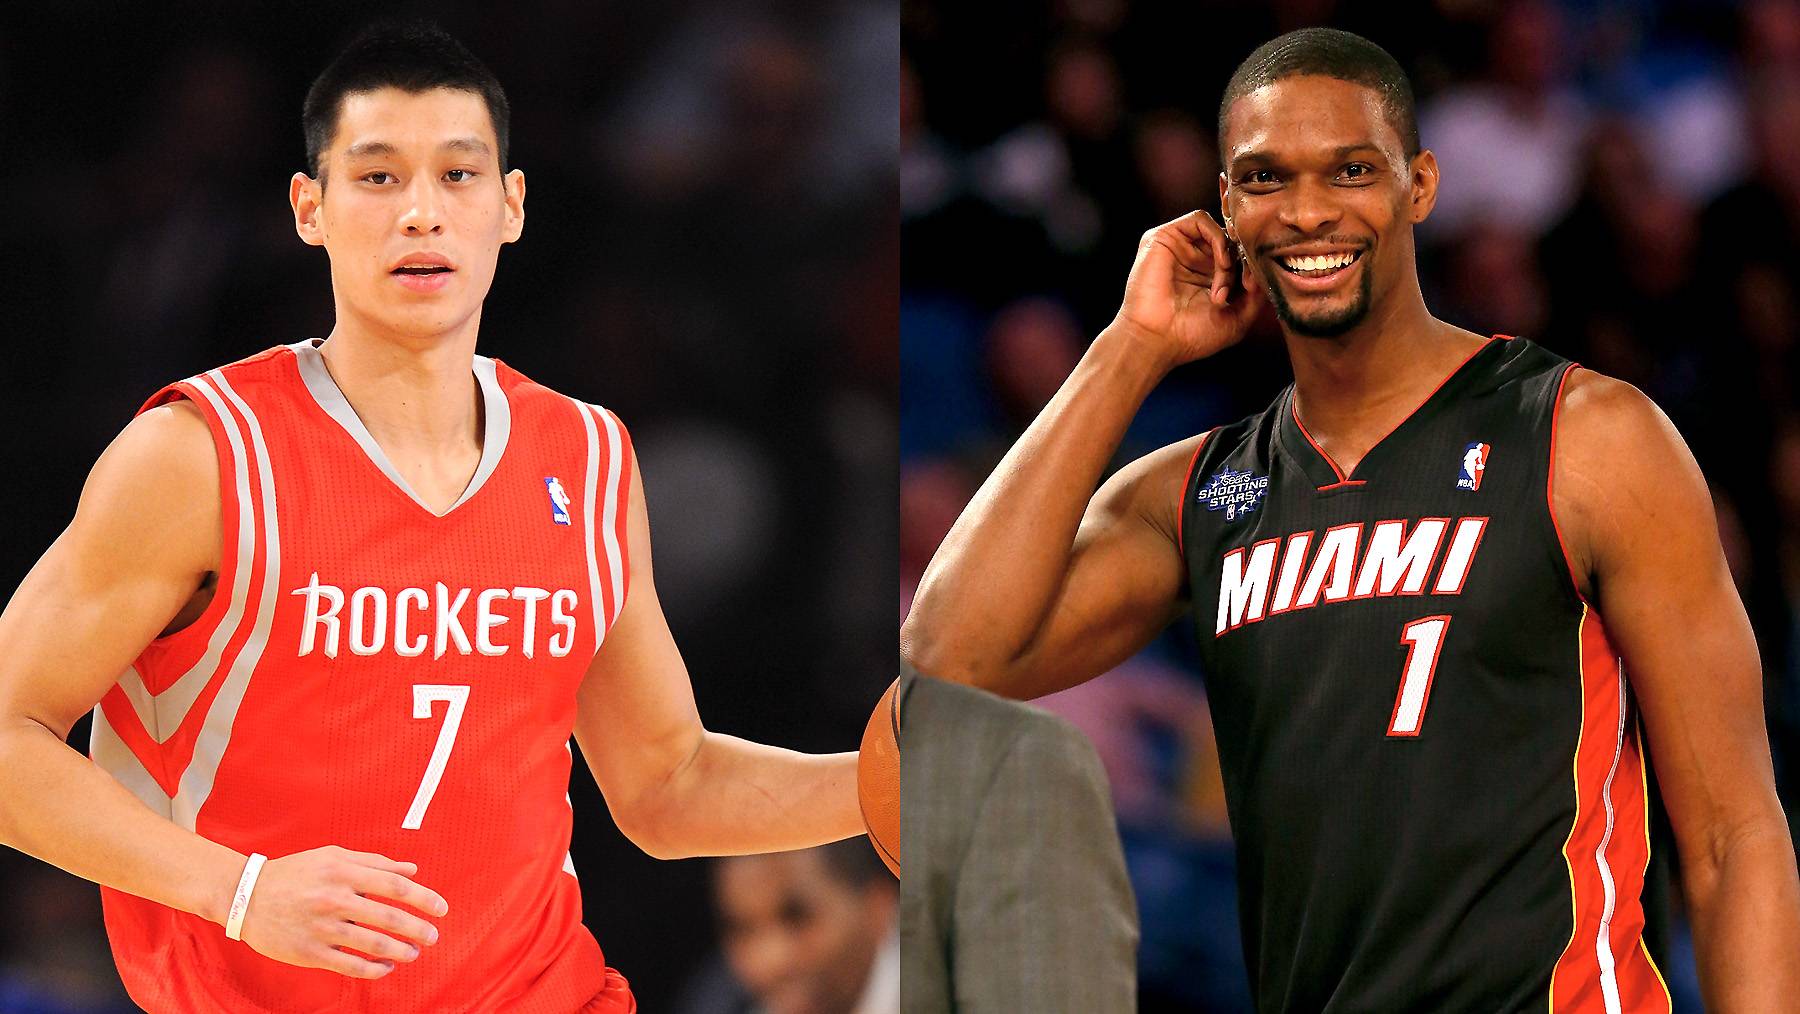 LeBron James of Miami Heat tops NBA jersey sales as Jeremy Lin falls away, NBA